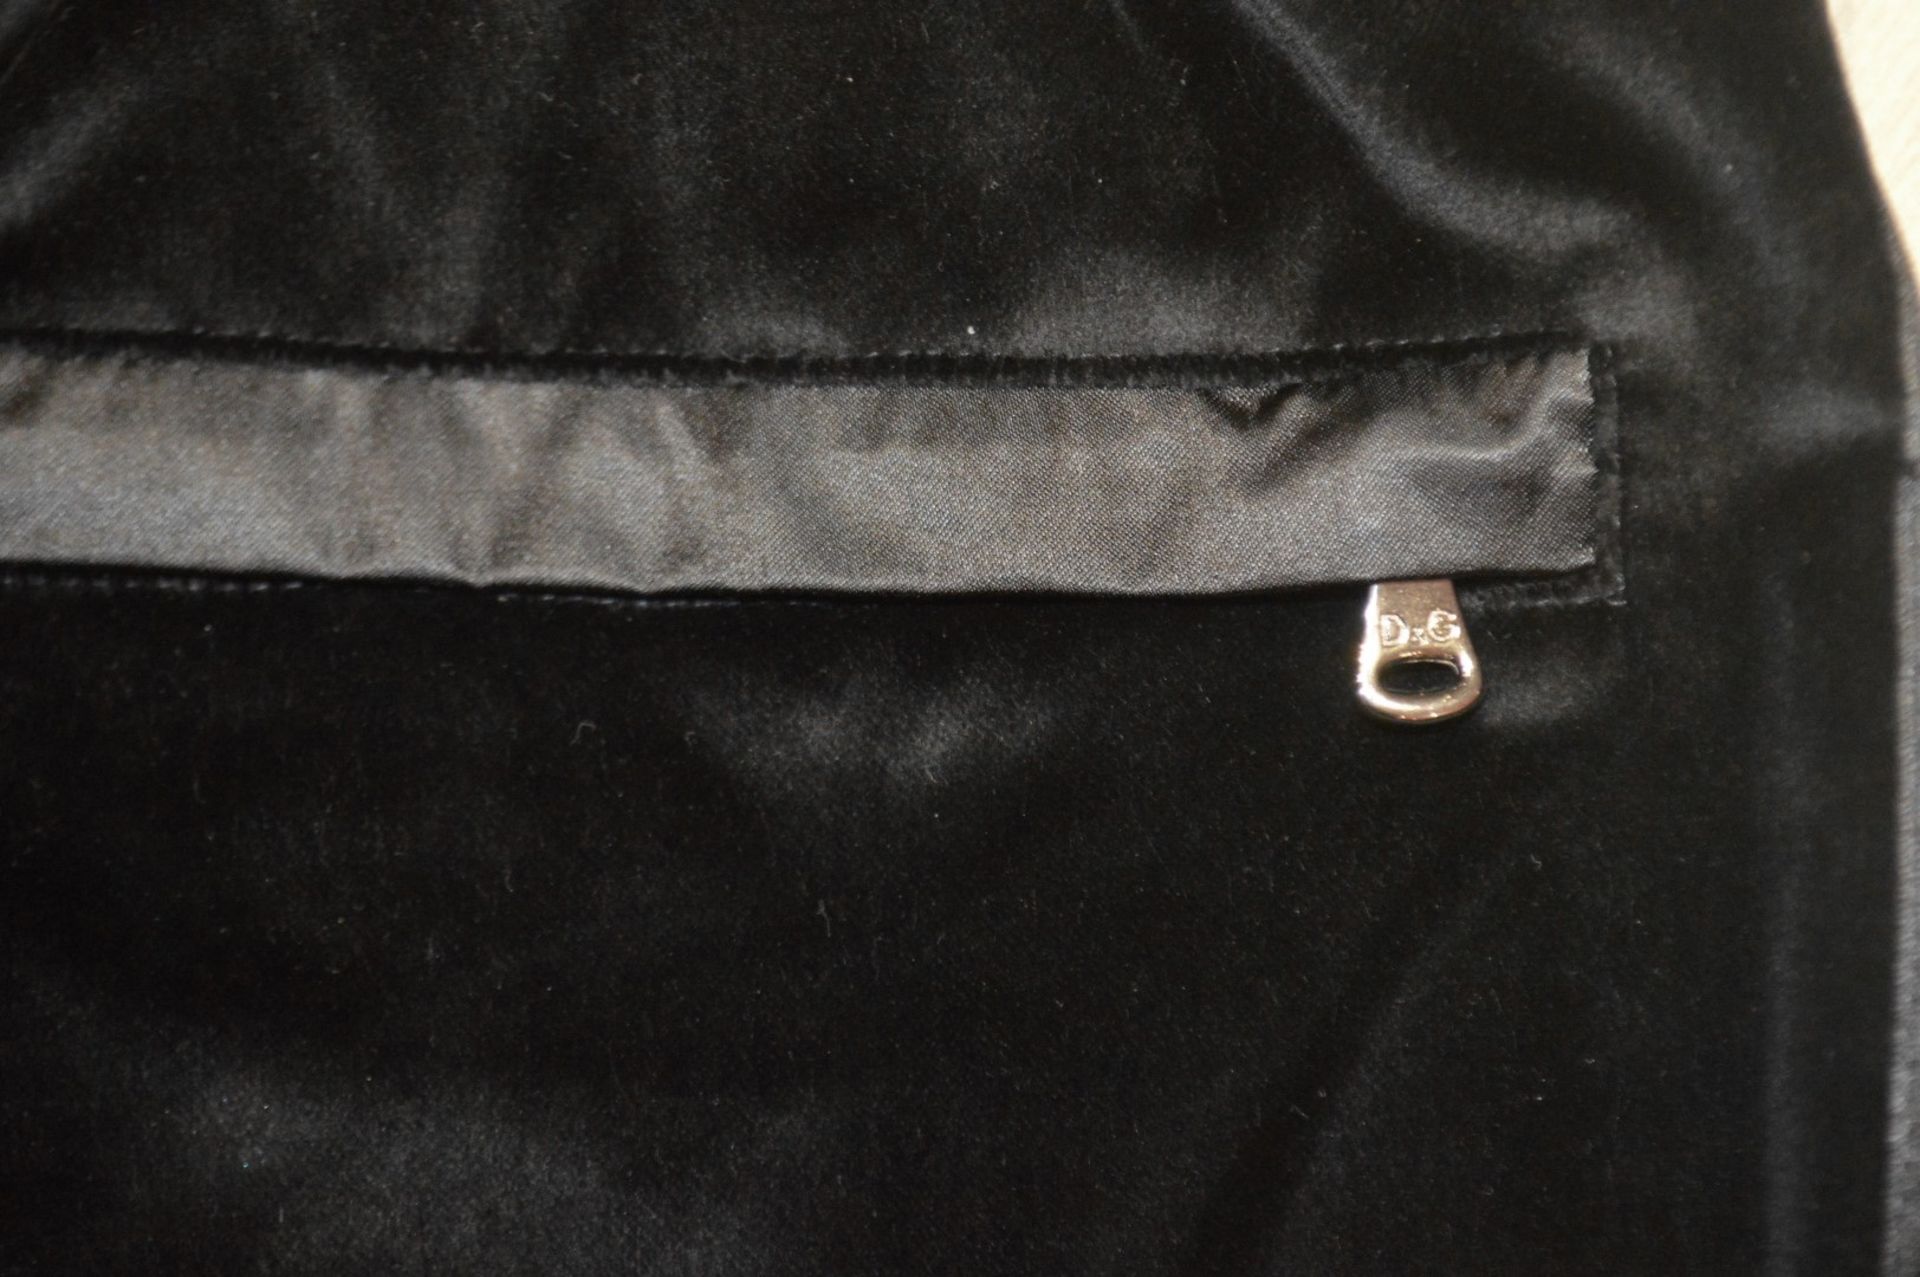 1 x Pair Of Men's Genuine Dolce & Gabbana Trousers In Black Velvet - Size: 46 - Image 3 of 7